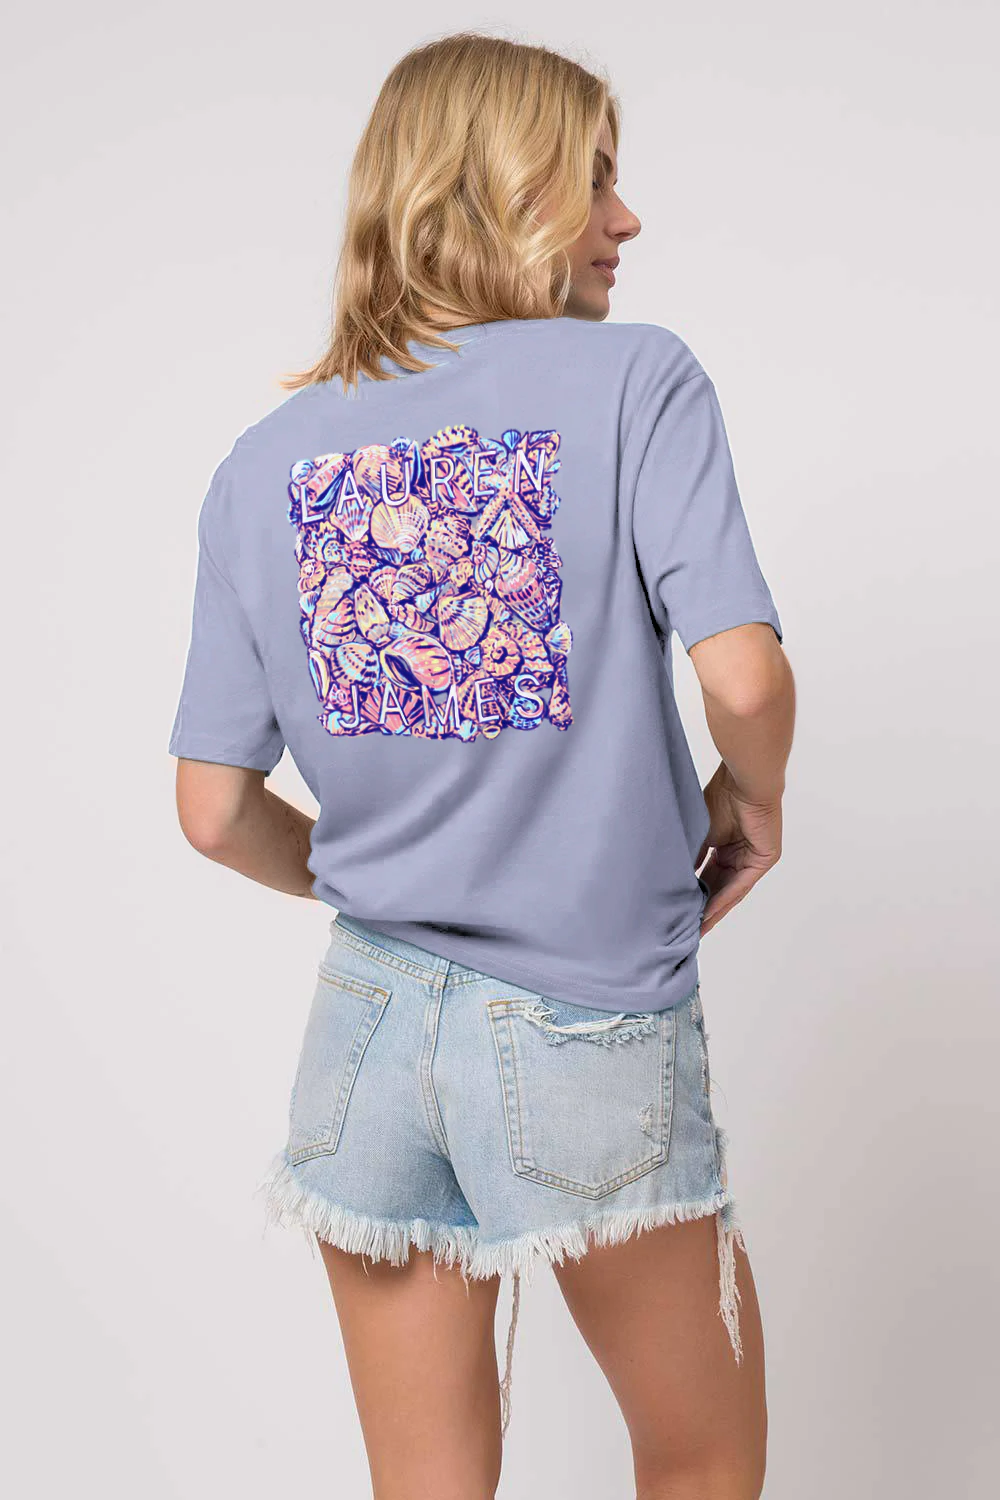 Lauren James Colorful Shells Short Sleeve Tee Shirt